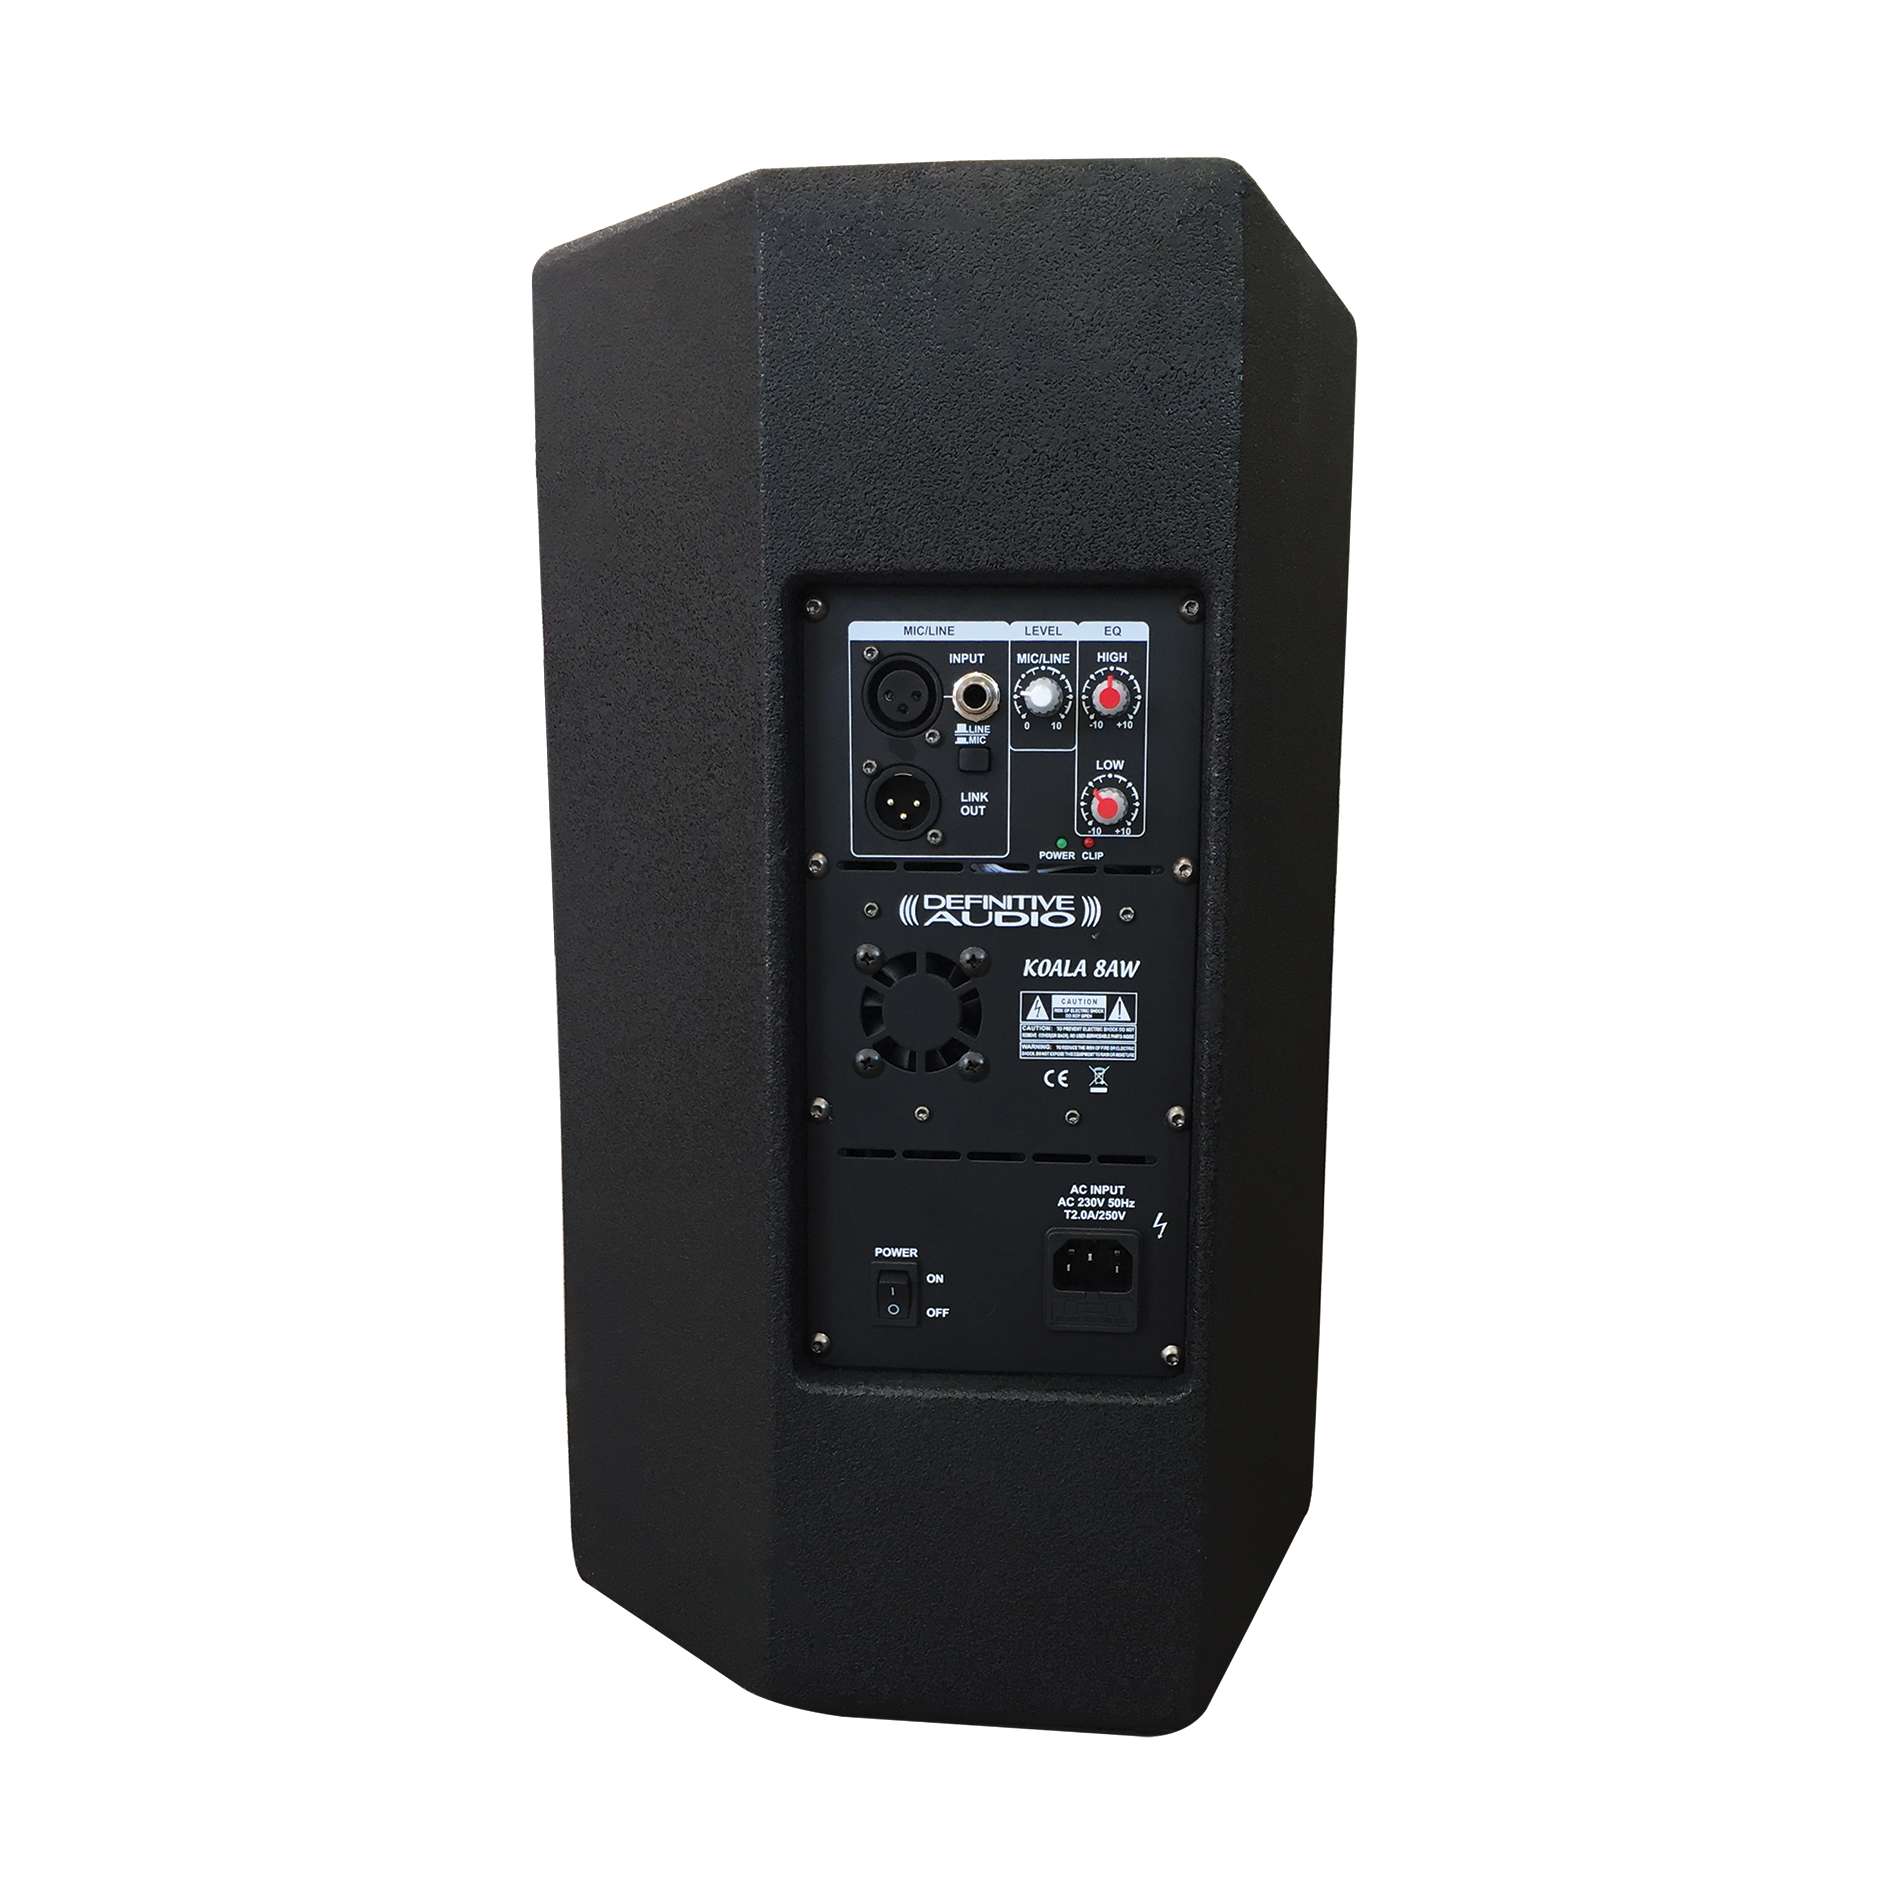 Definitive Audio Koala Neo 2400 Quad - Complete PA system - Variation 2